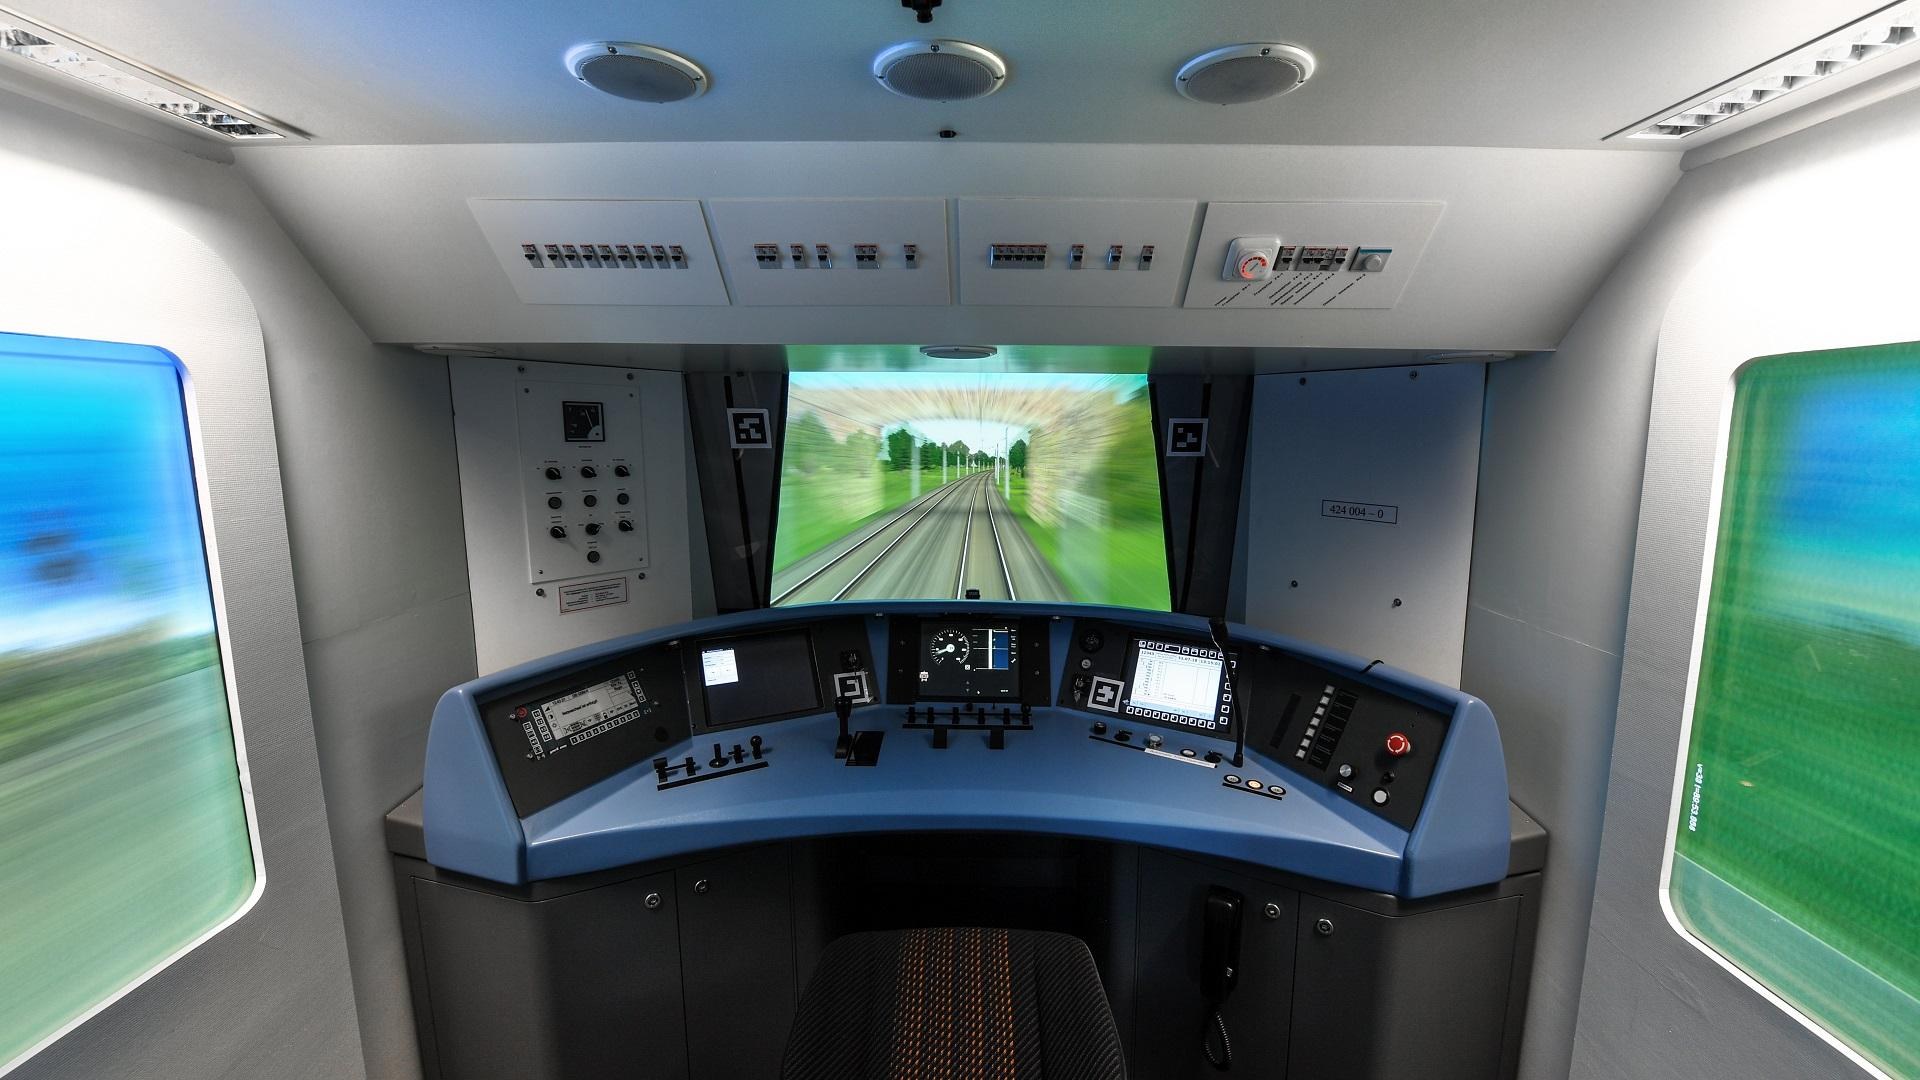 RailSiTe® – DLR's railway simulation and test laboratory